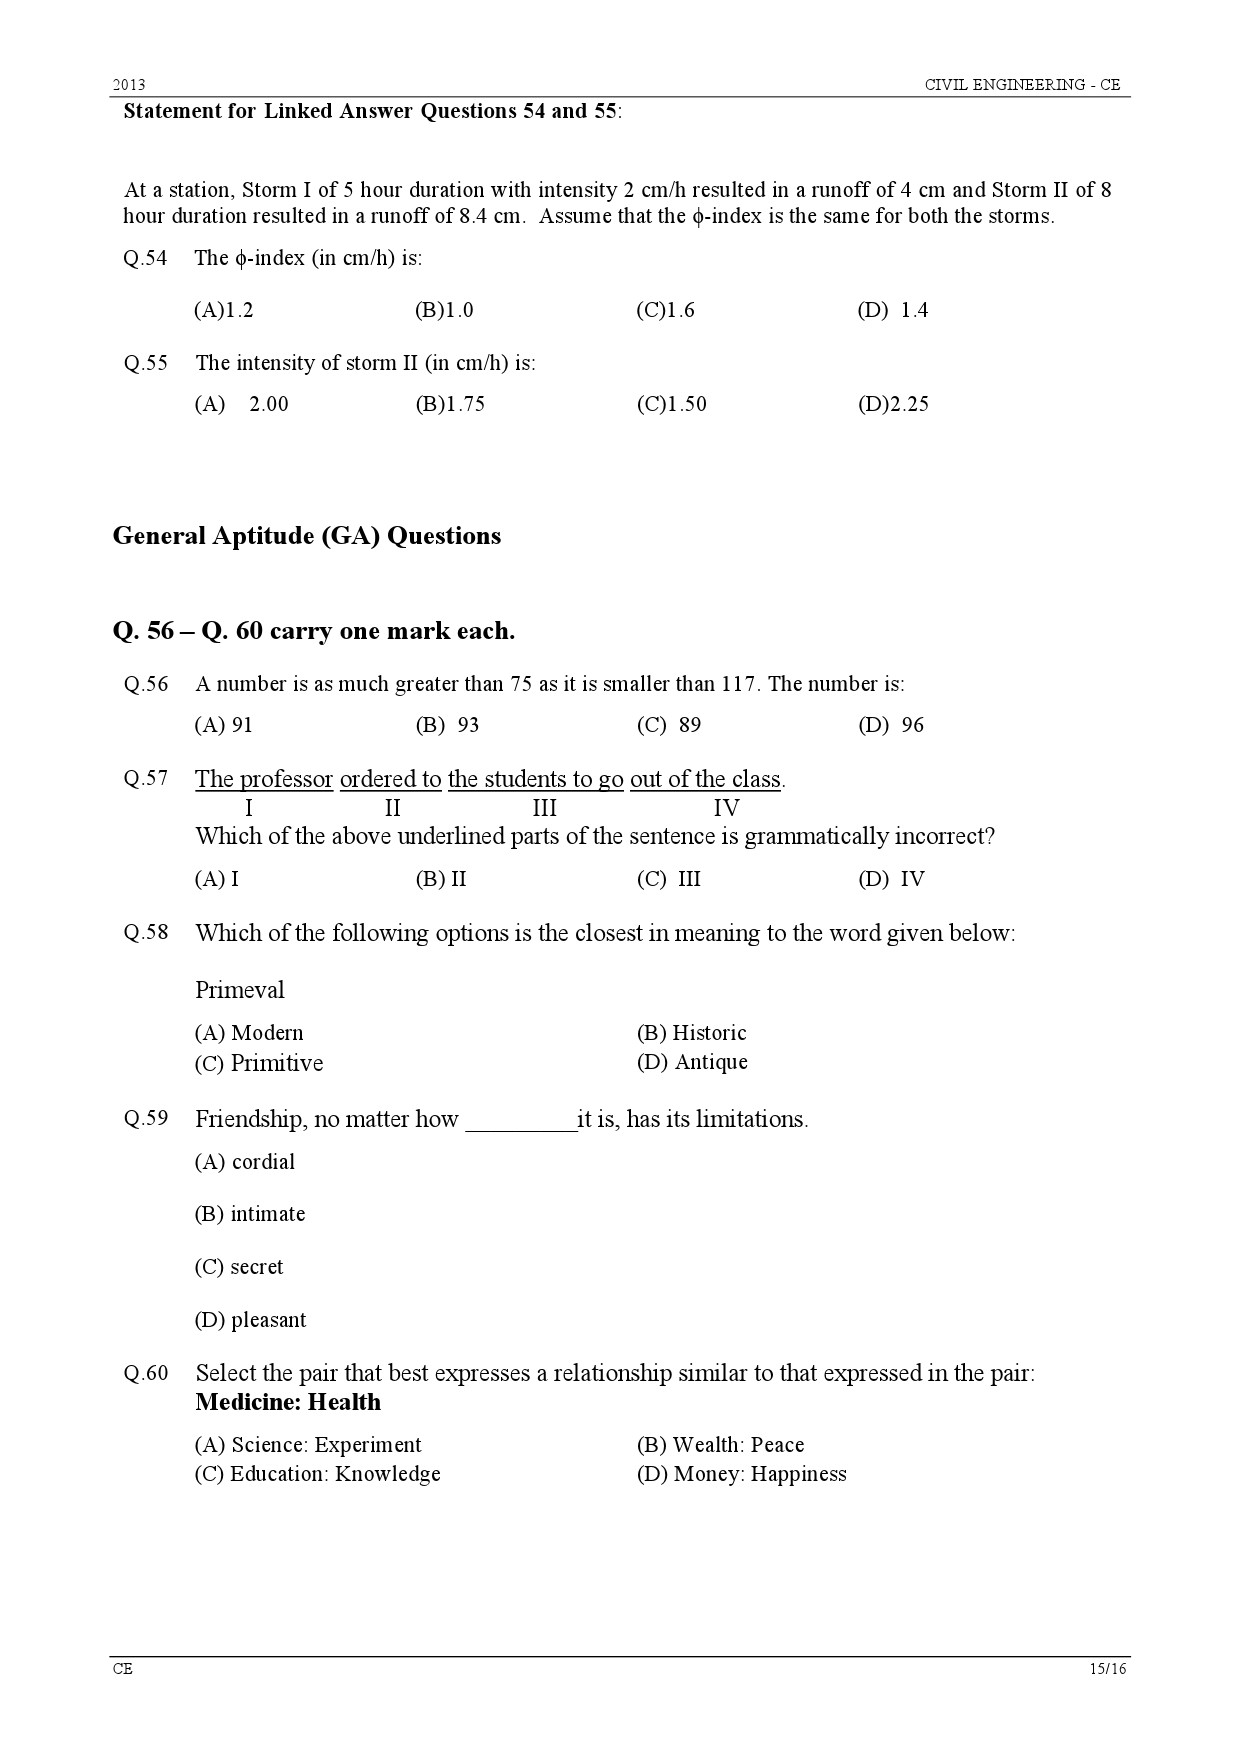 GATE Exam Question Paper 2013 Civil Engineering 15